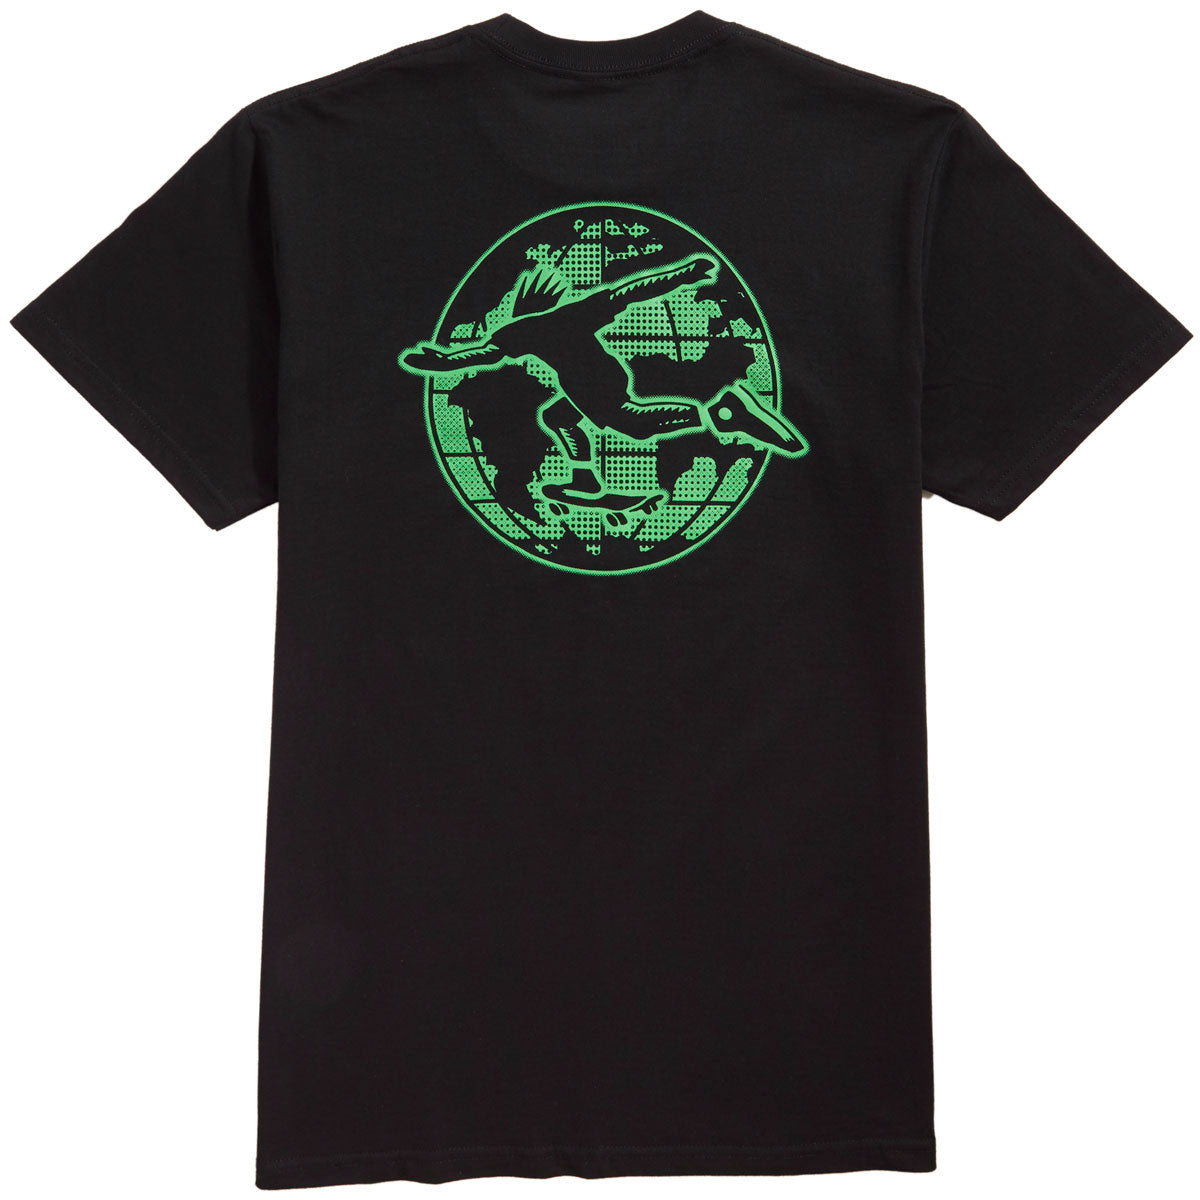 CCS Neo Globe T-Shirt - Black/Green image 1